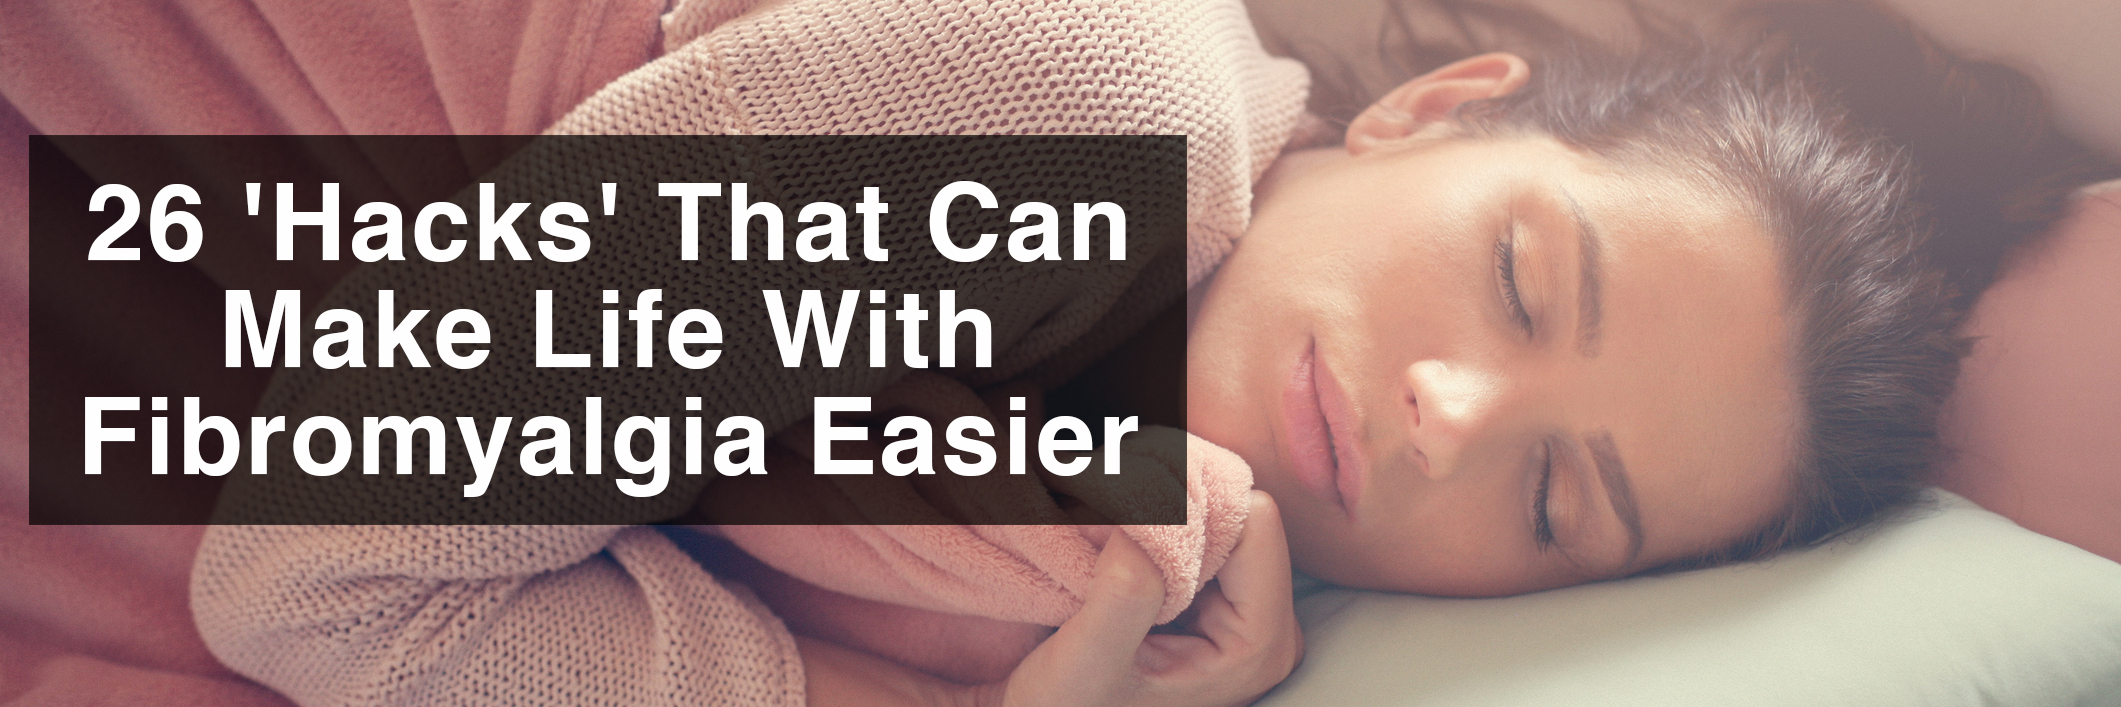 26 hacks that can make life with fibromyalgia easier